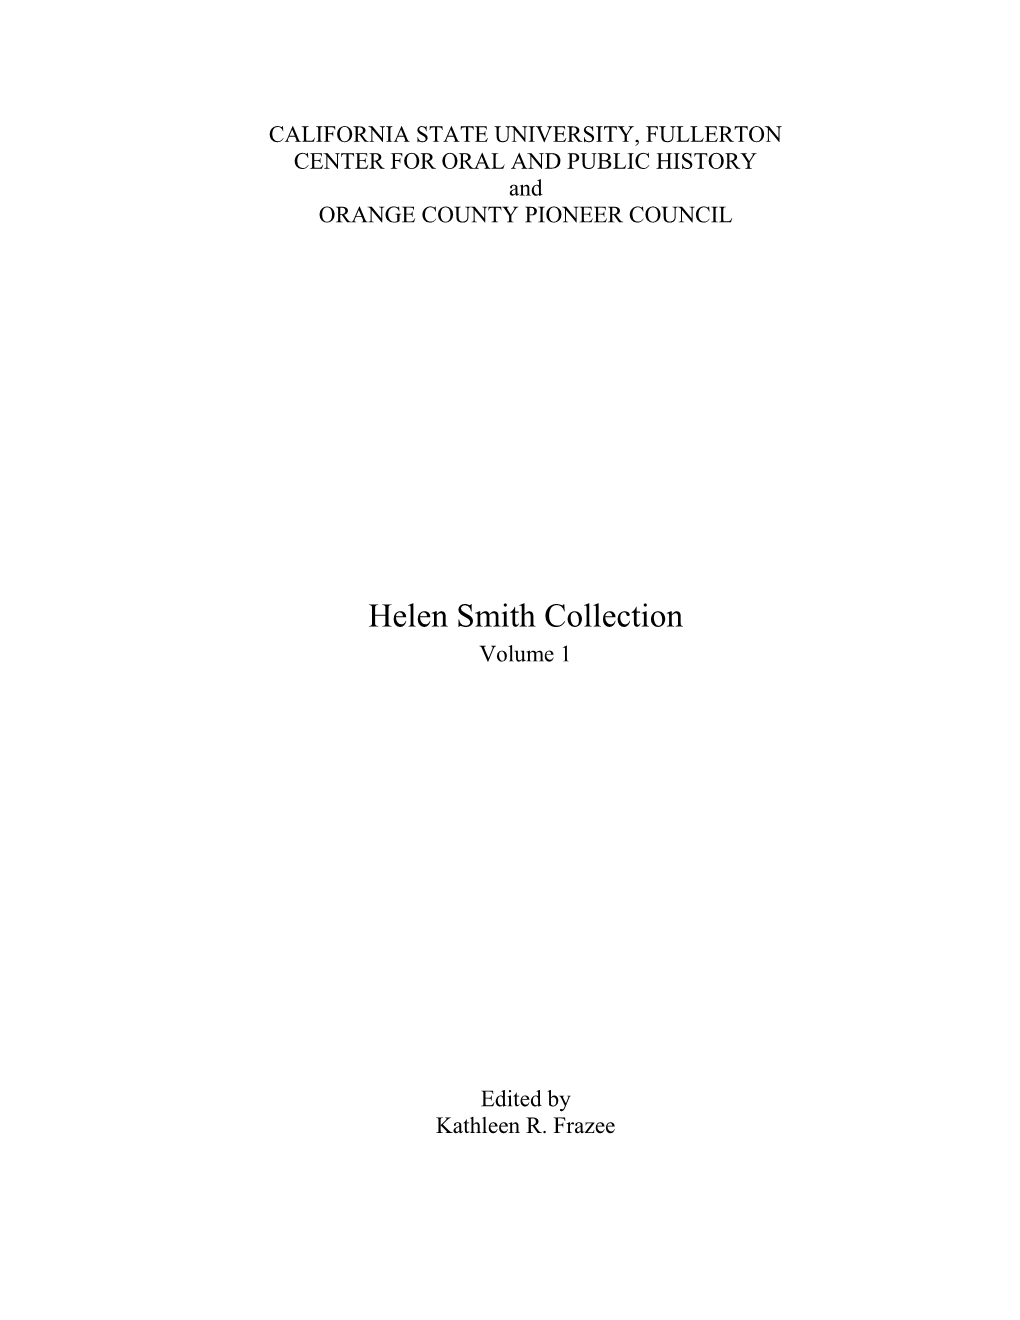 Helen Smith Collection Volume 1